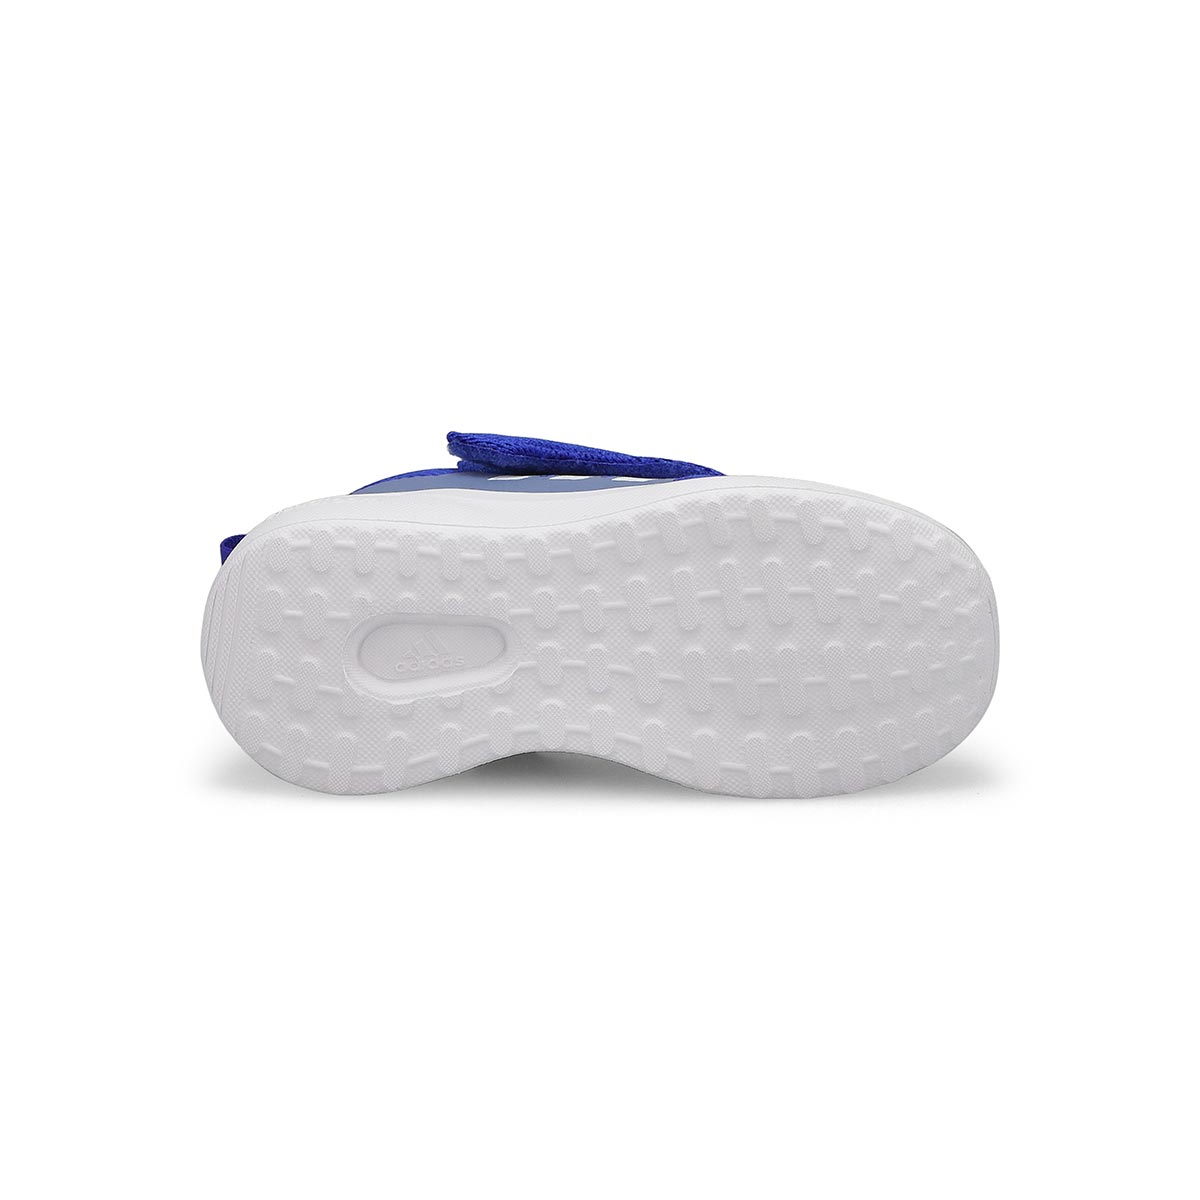 Infants  FortaRun 2.0 AC I Sneaker - Blue/White